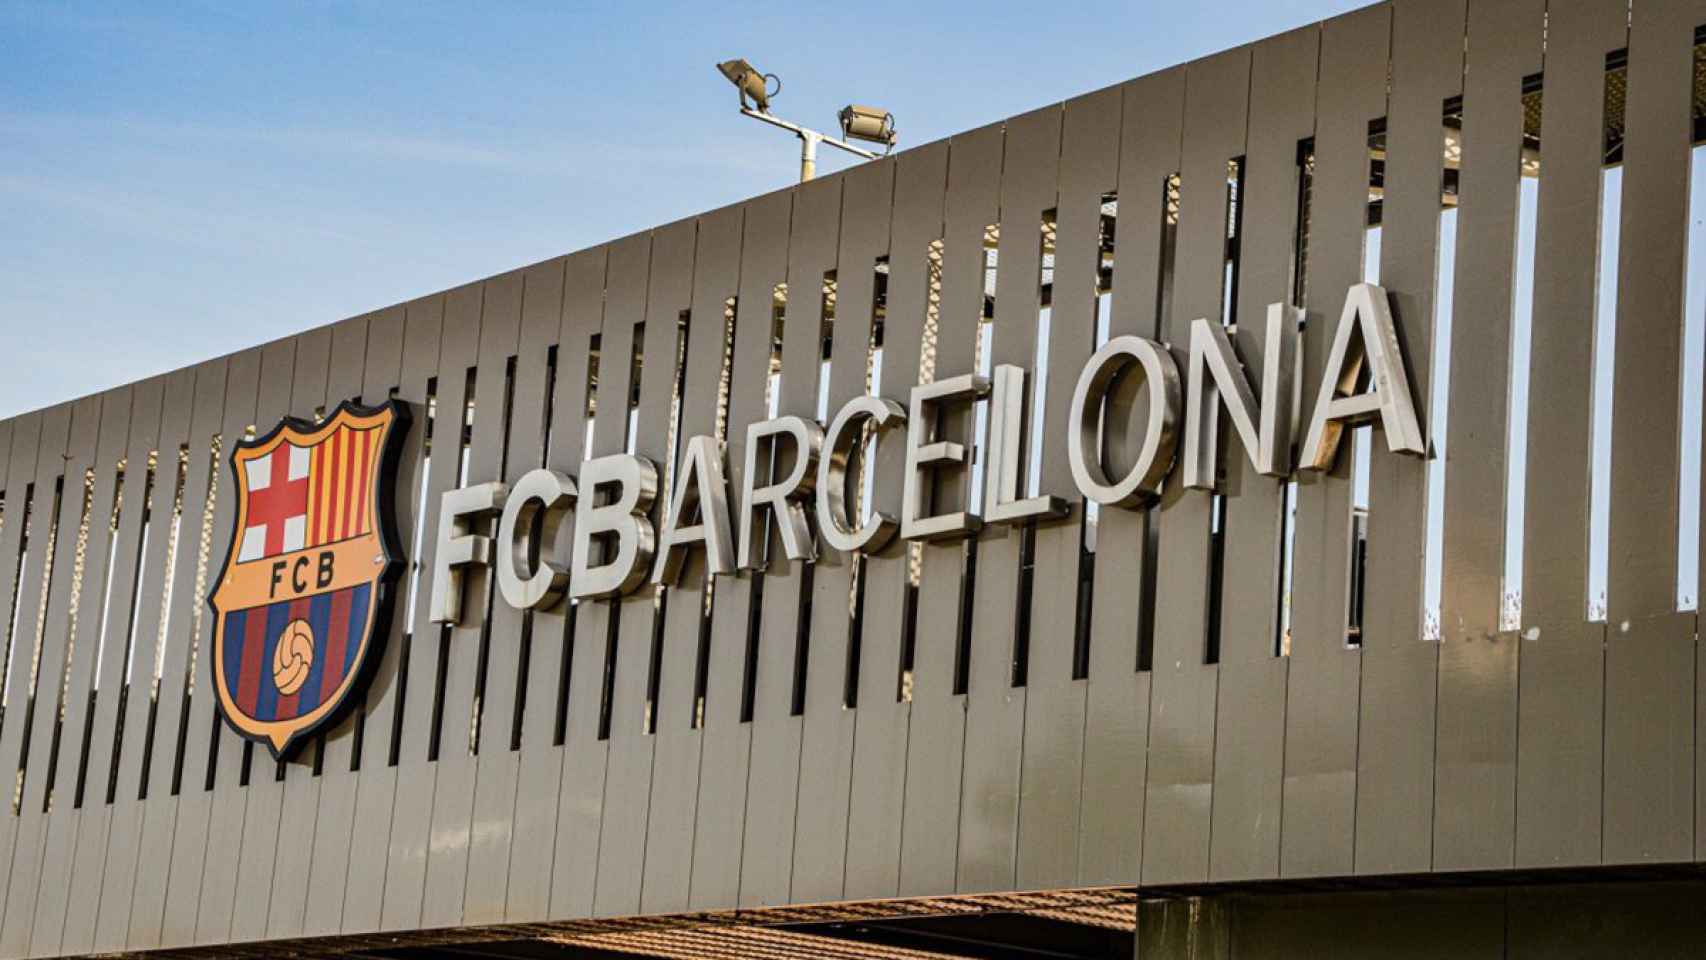 Imagen de la fachada de la Ciutat Esportiva del FC Barcelona